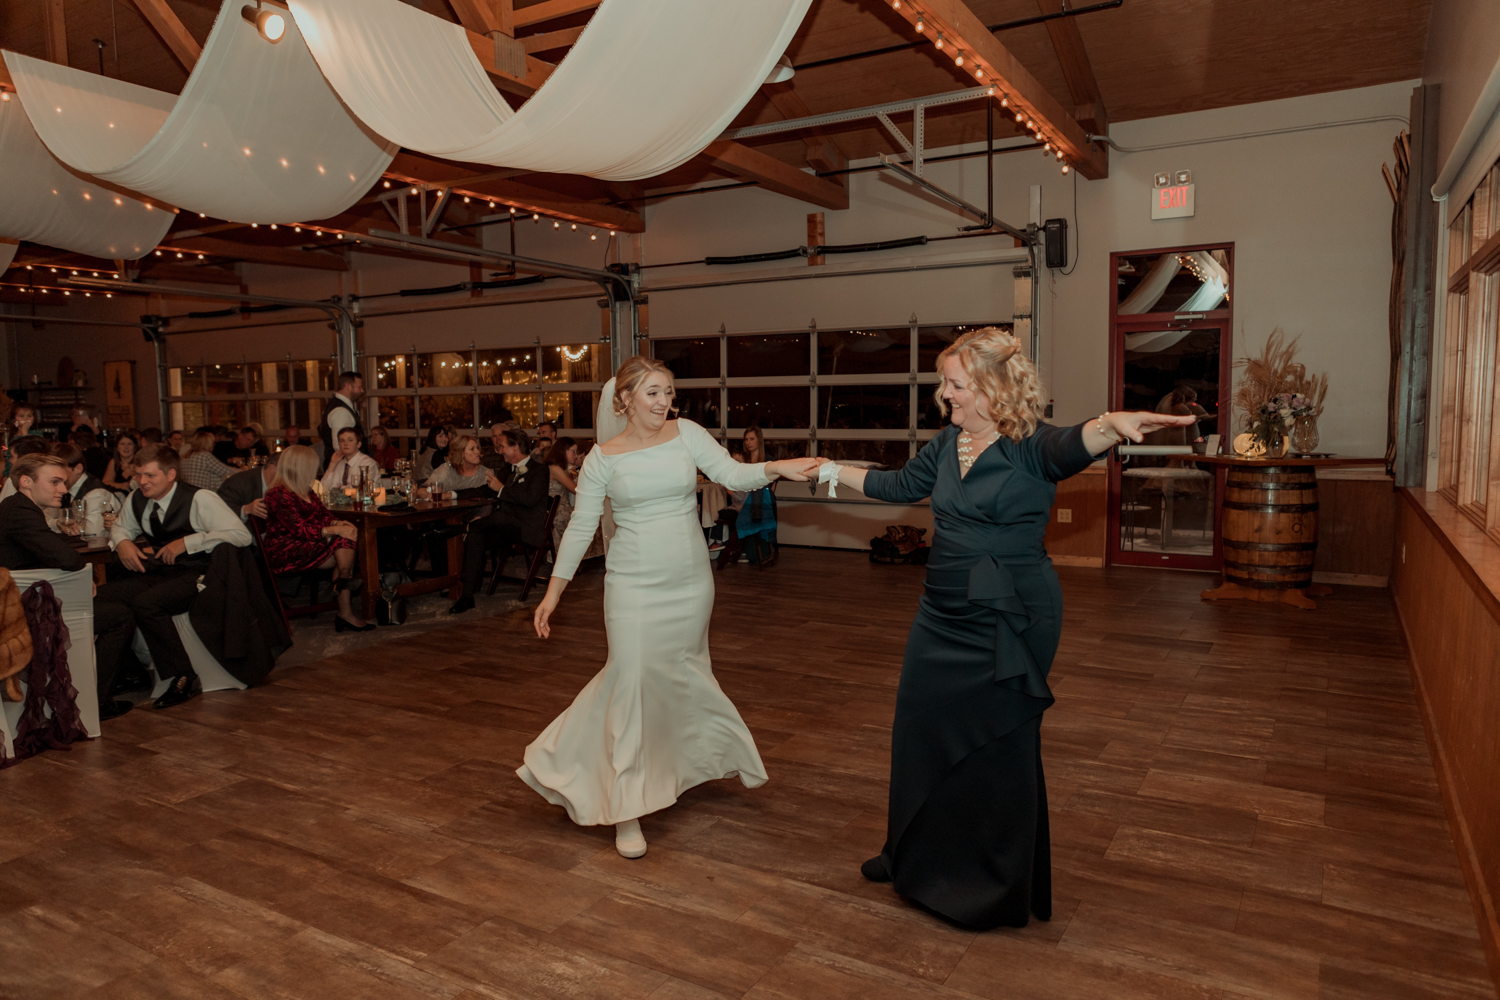 Cedar Ridge Winery Wedding Pictures, Swisher, Iowa